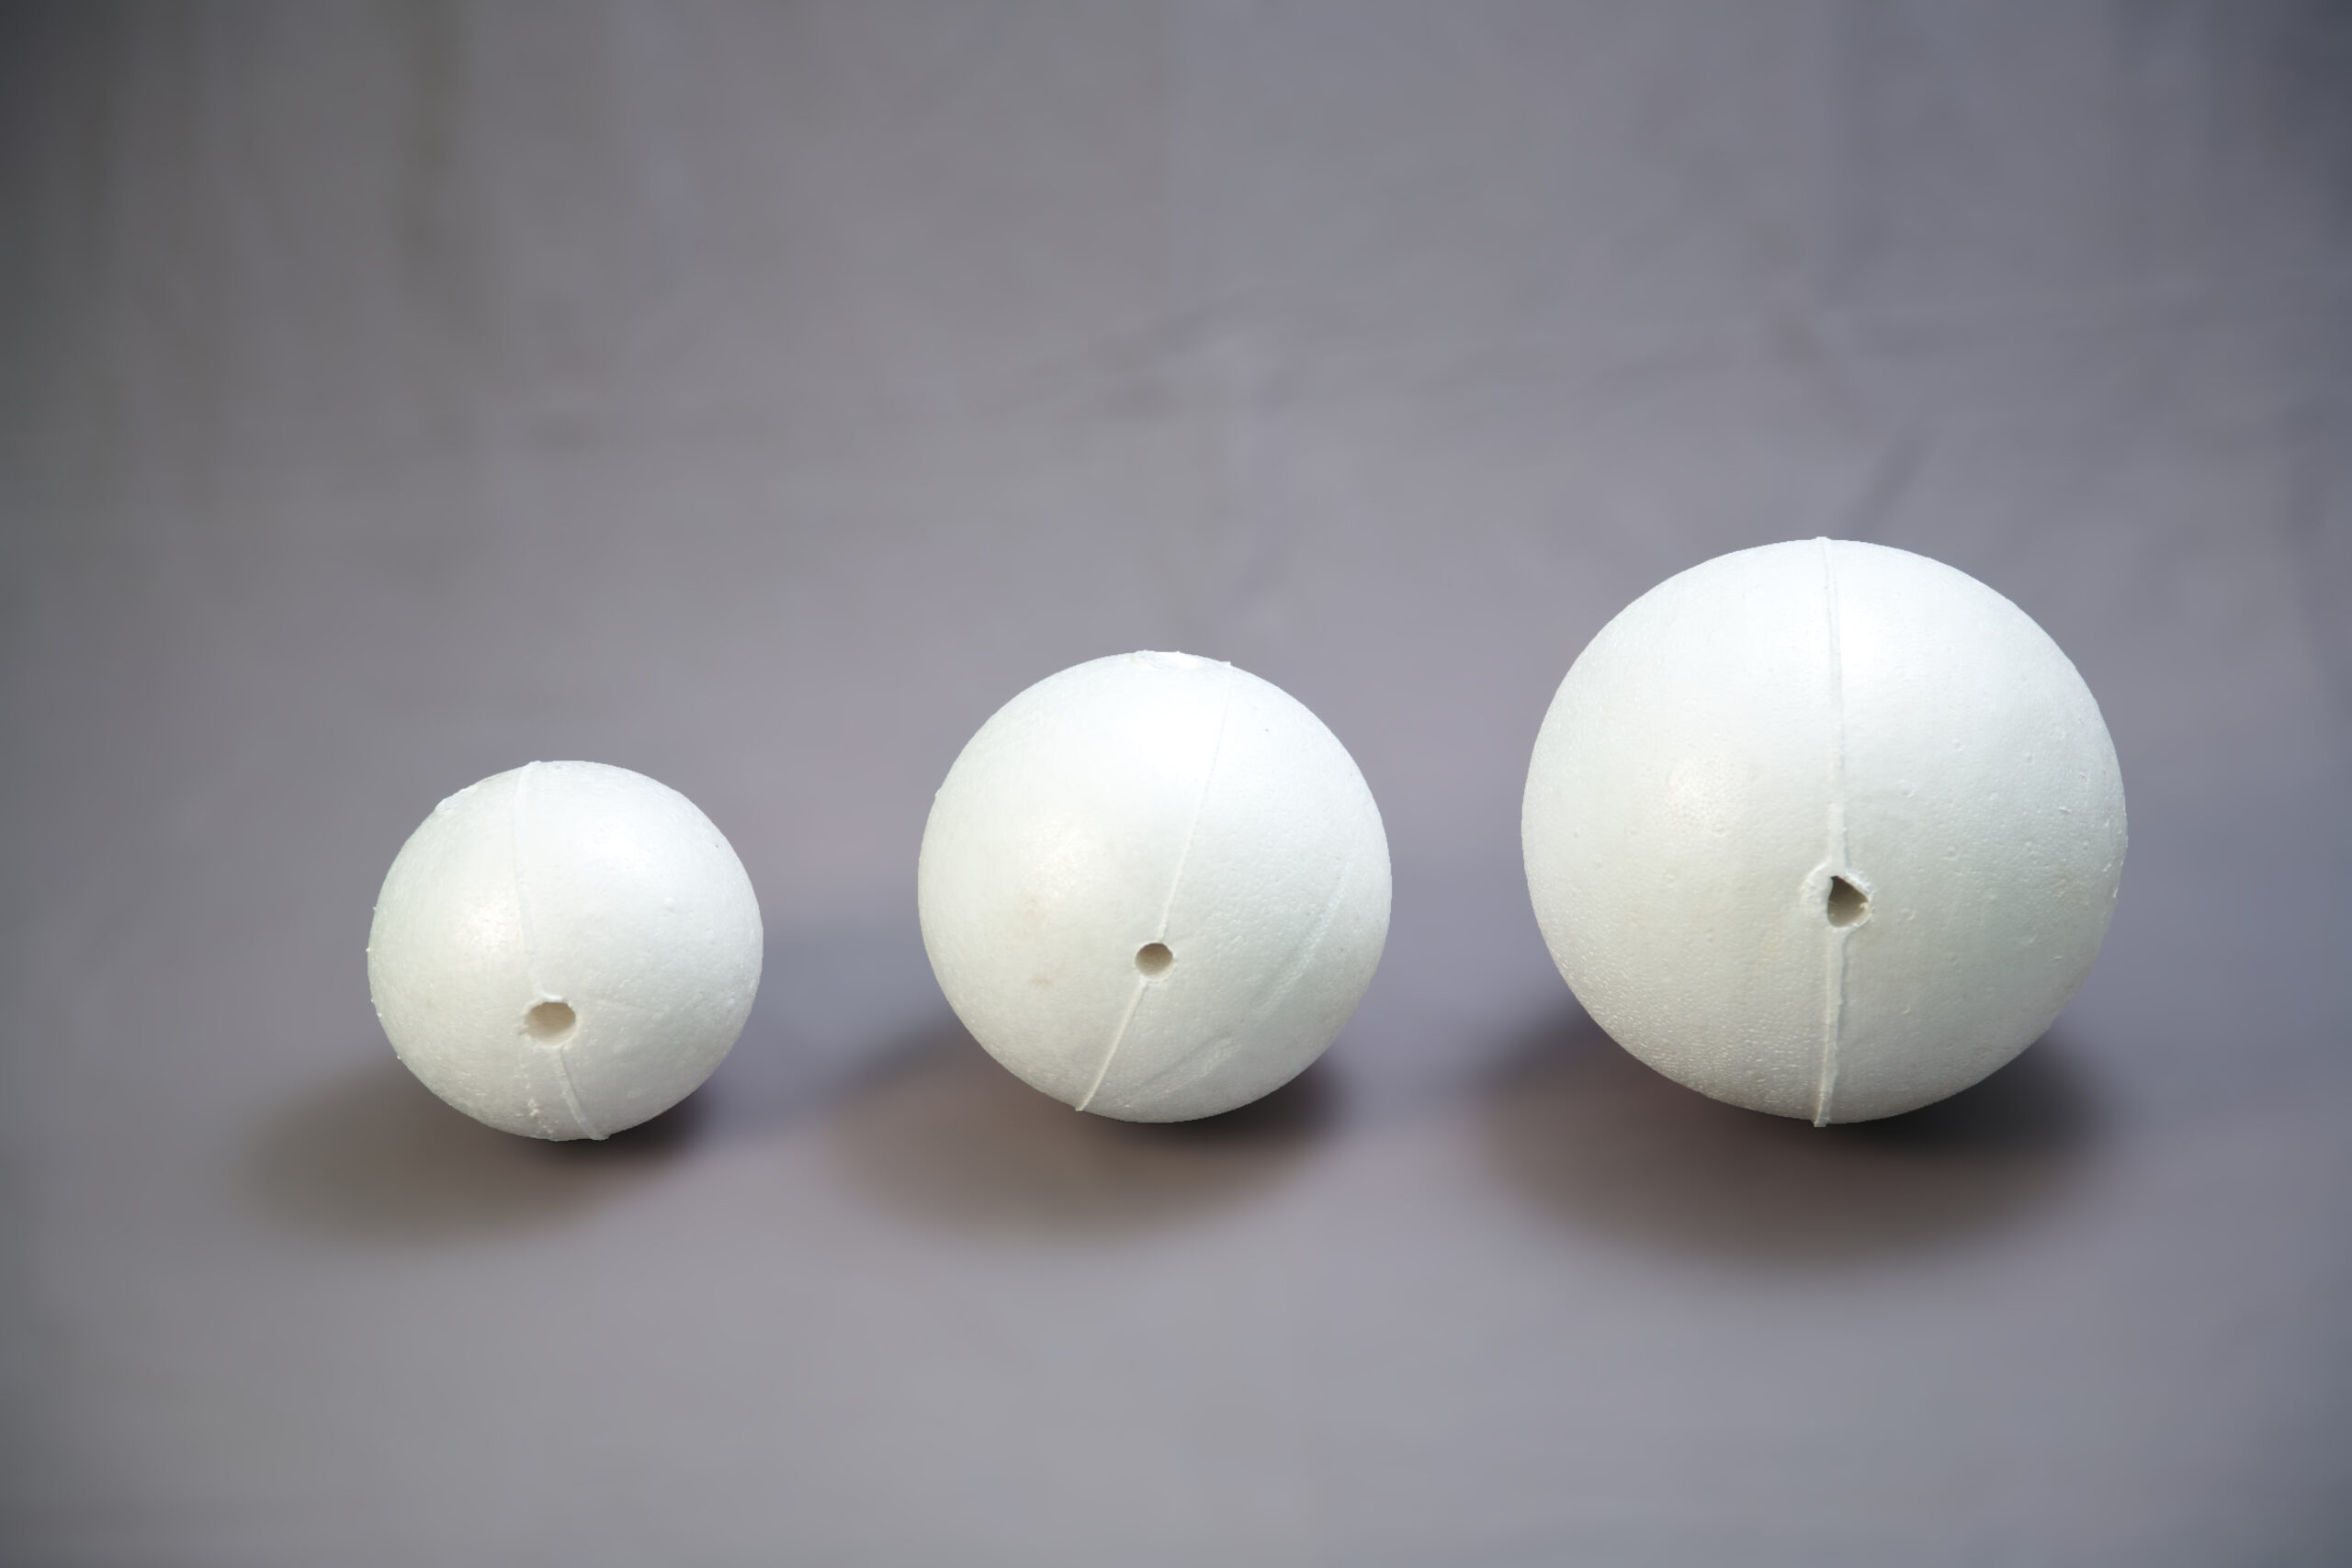 styro foam balls